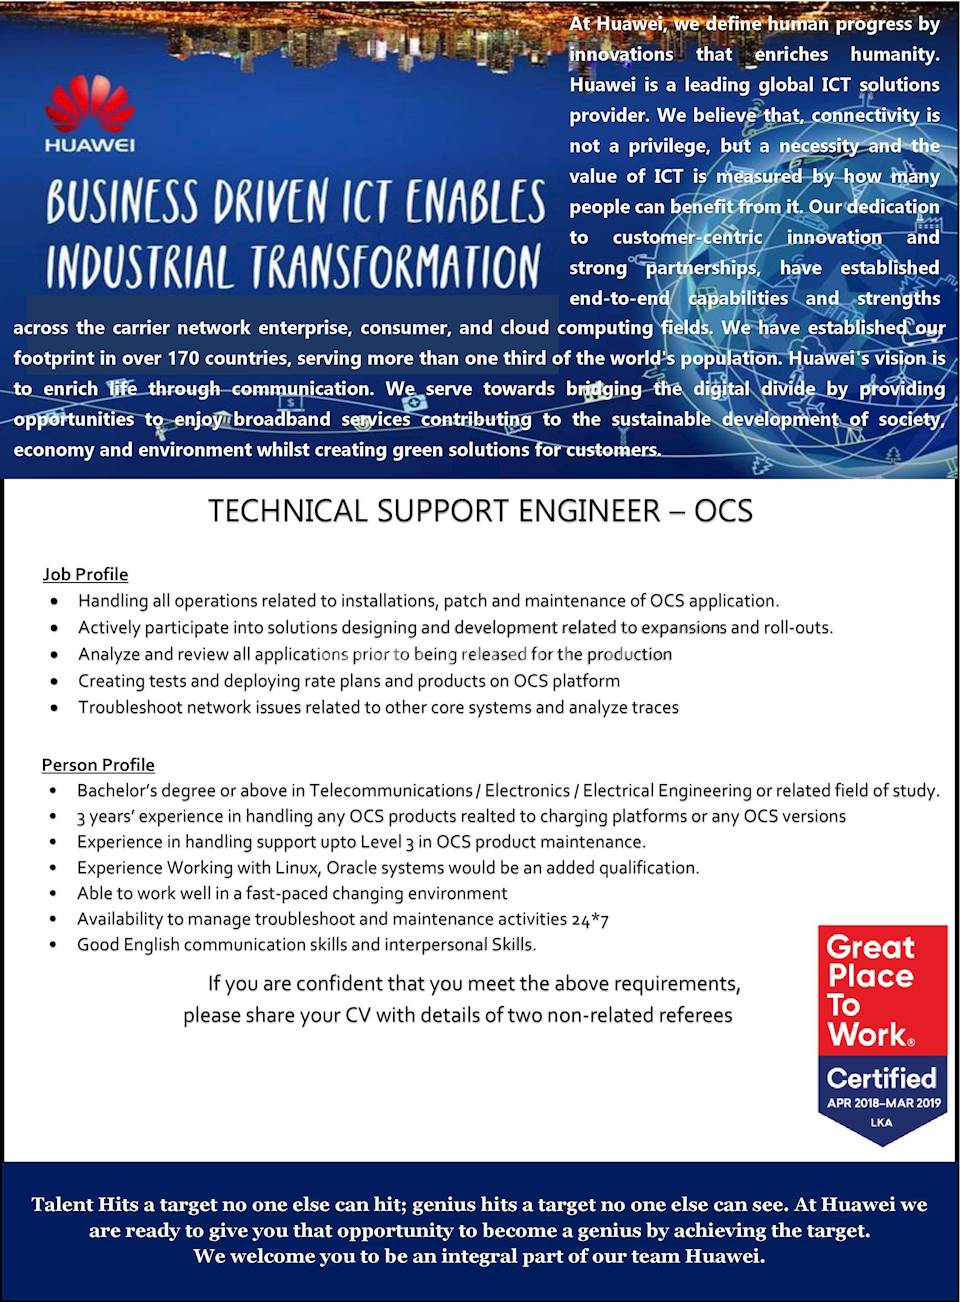 Technical Support Engineer - OCS